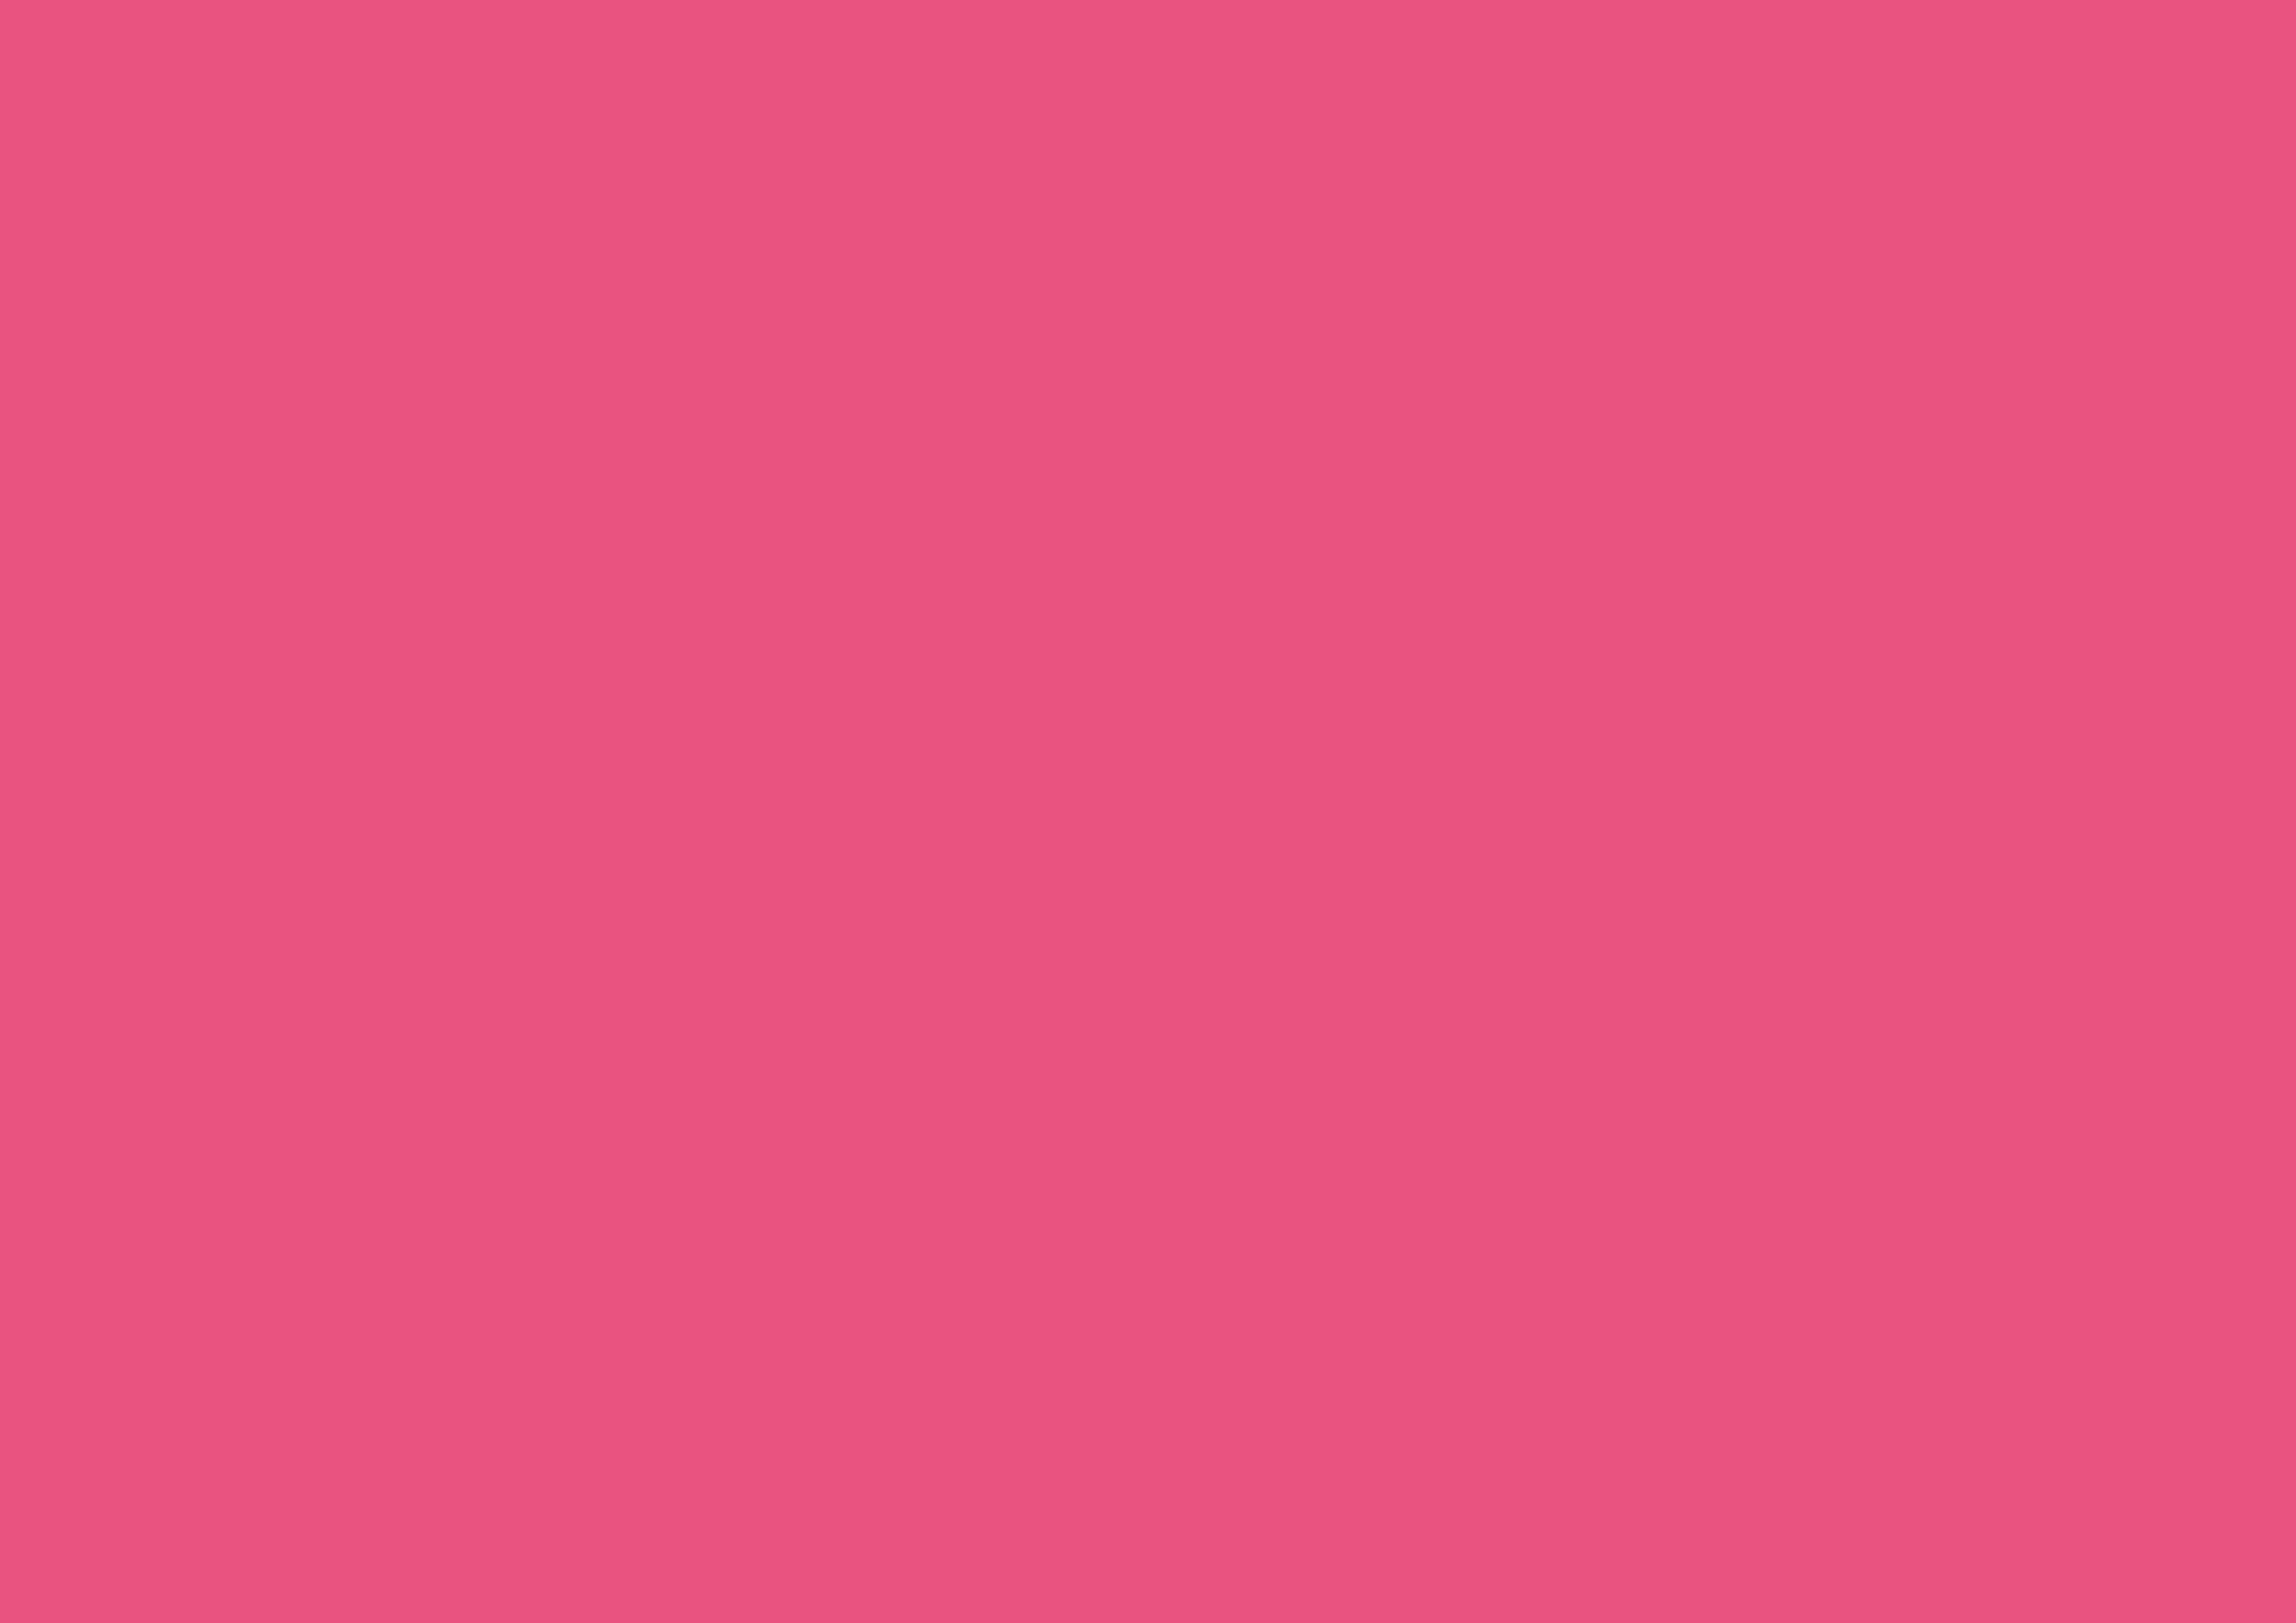 3508x2480 Dark Pink Solid Color Background